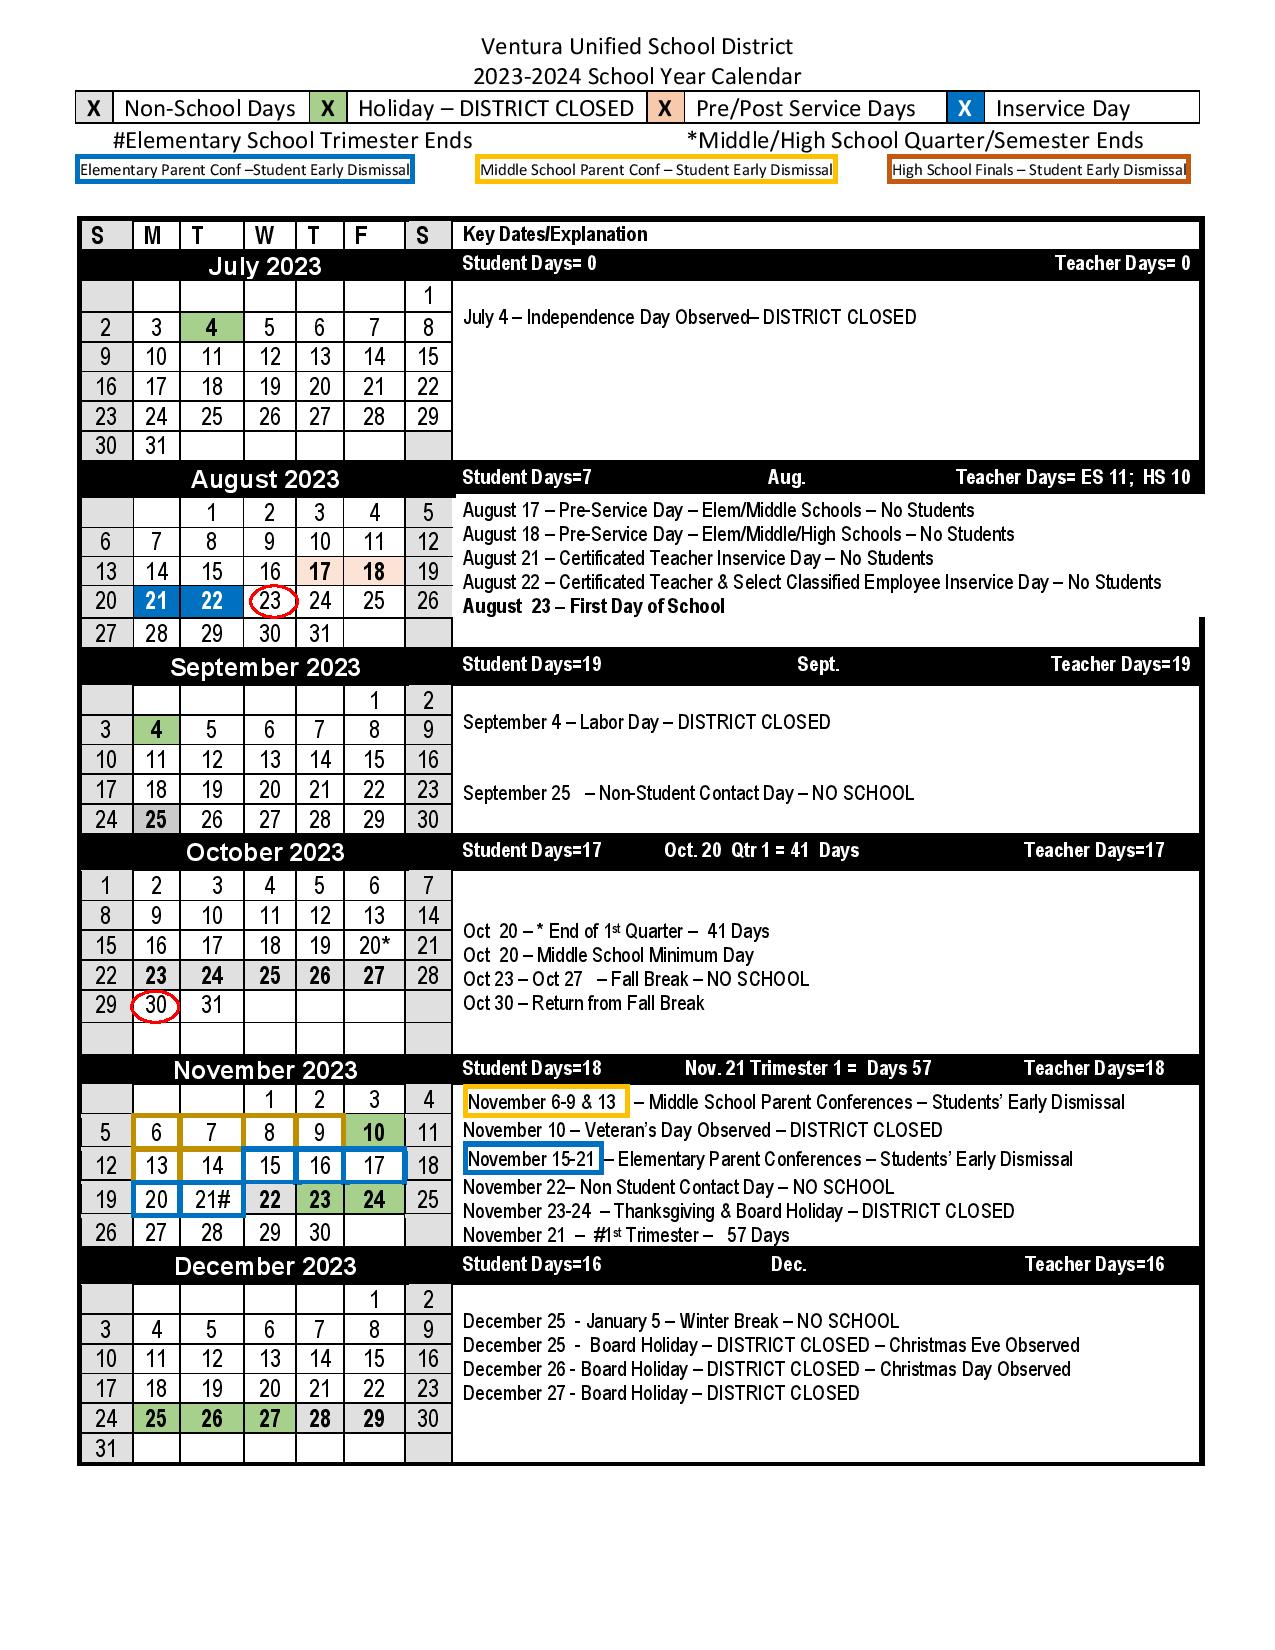 Ventura Unified School District Calendar 2023 2024 in PDF